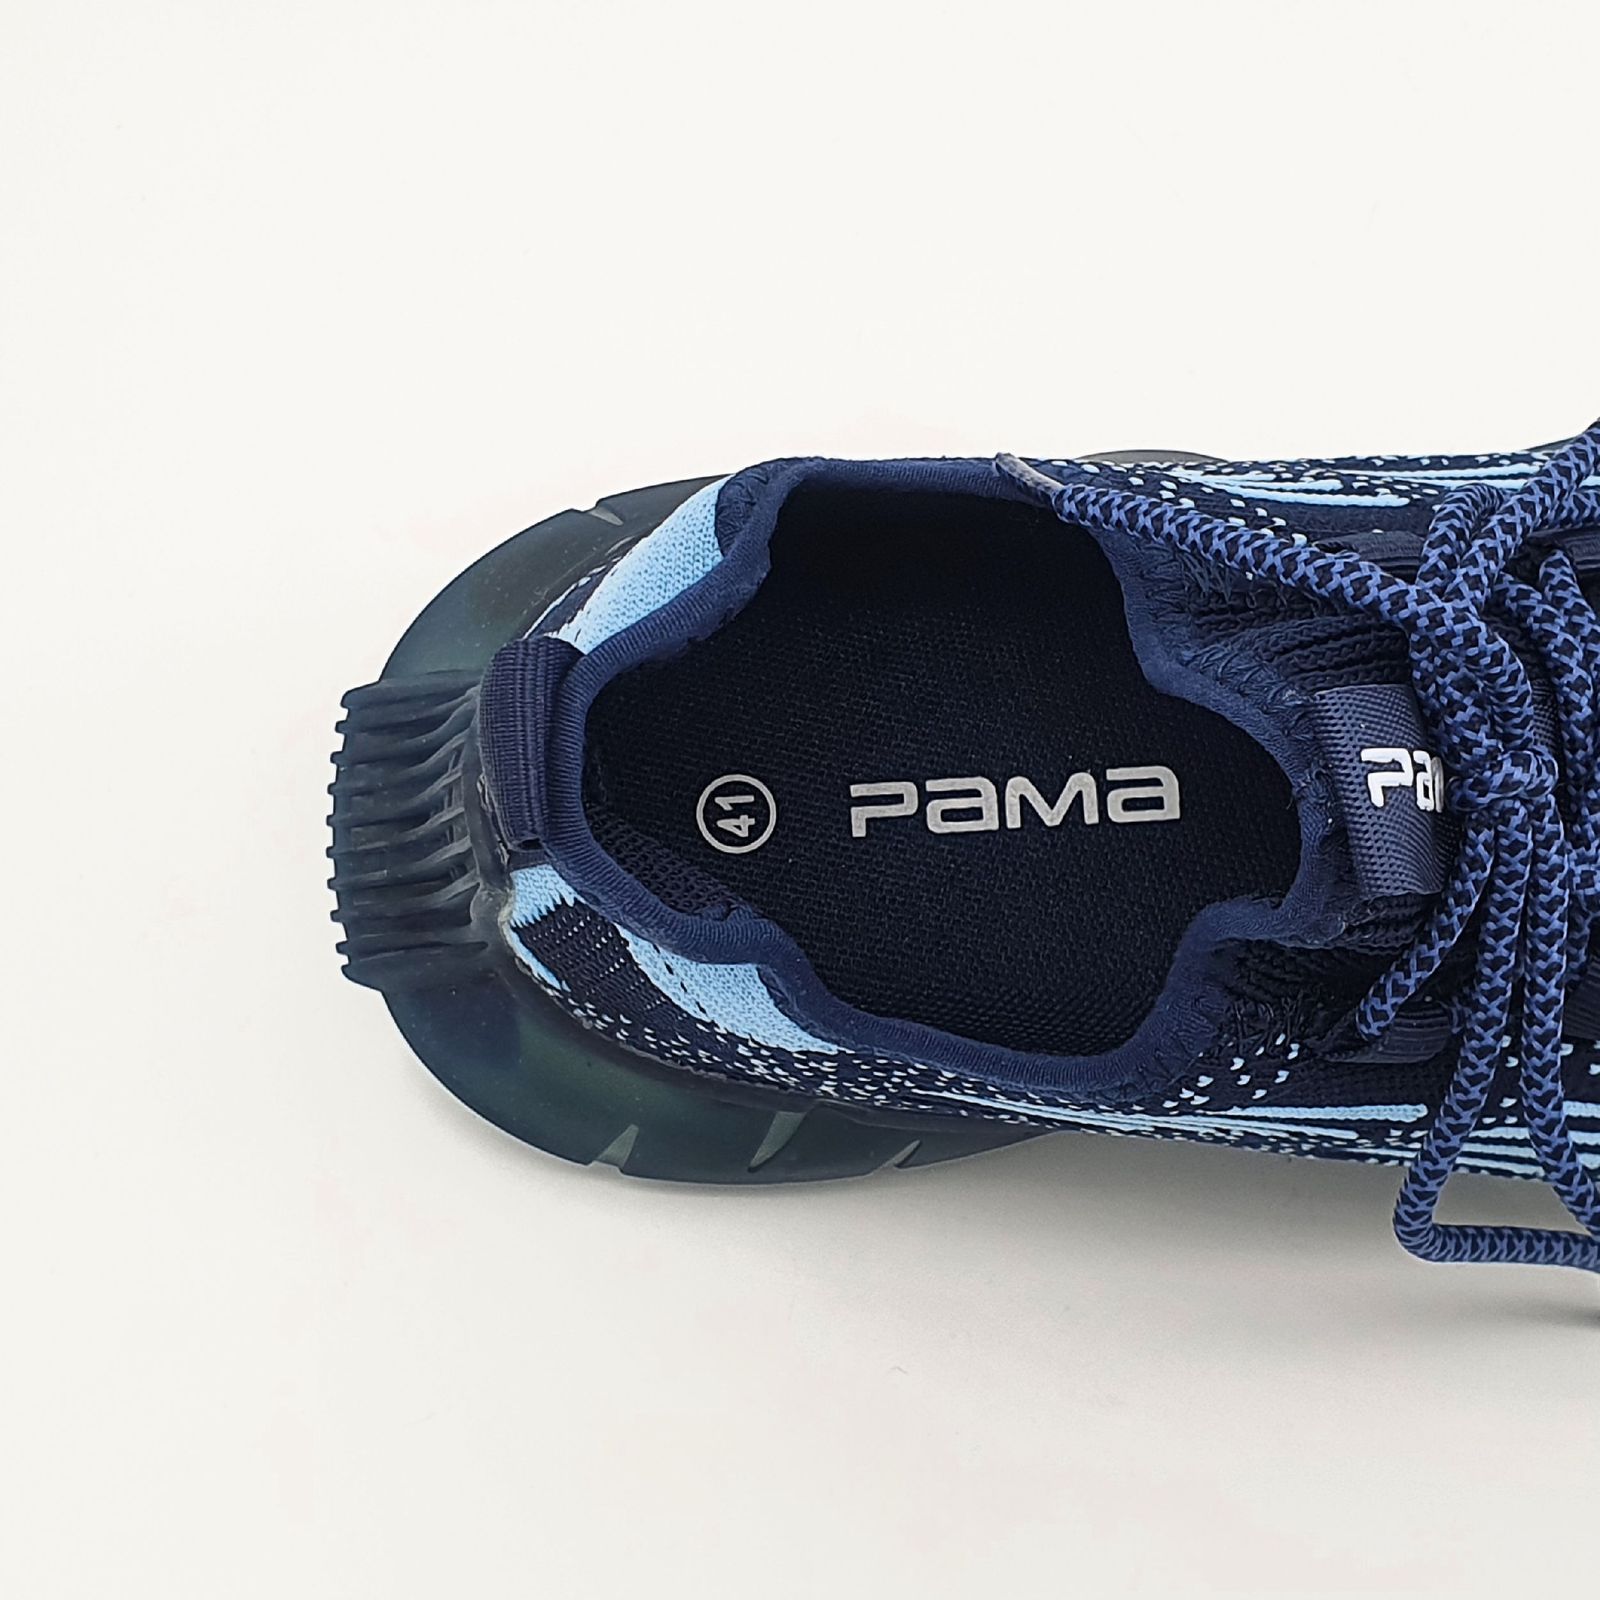 کفش طبیعت گردی مردانه پاما مدل VR-824 کد G1601-2 -  - 7